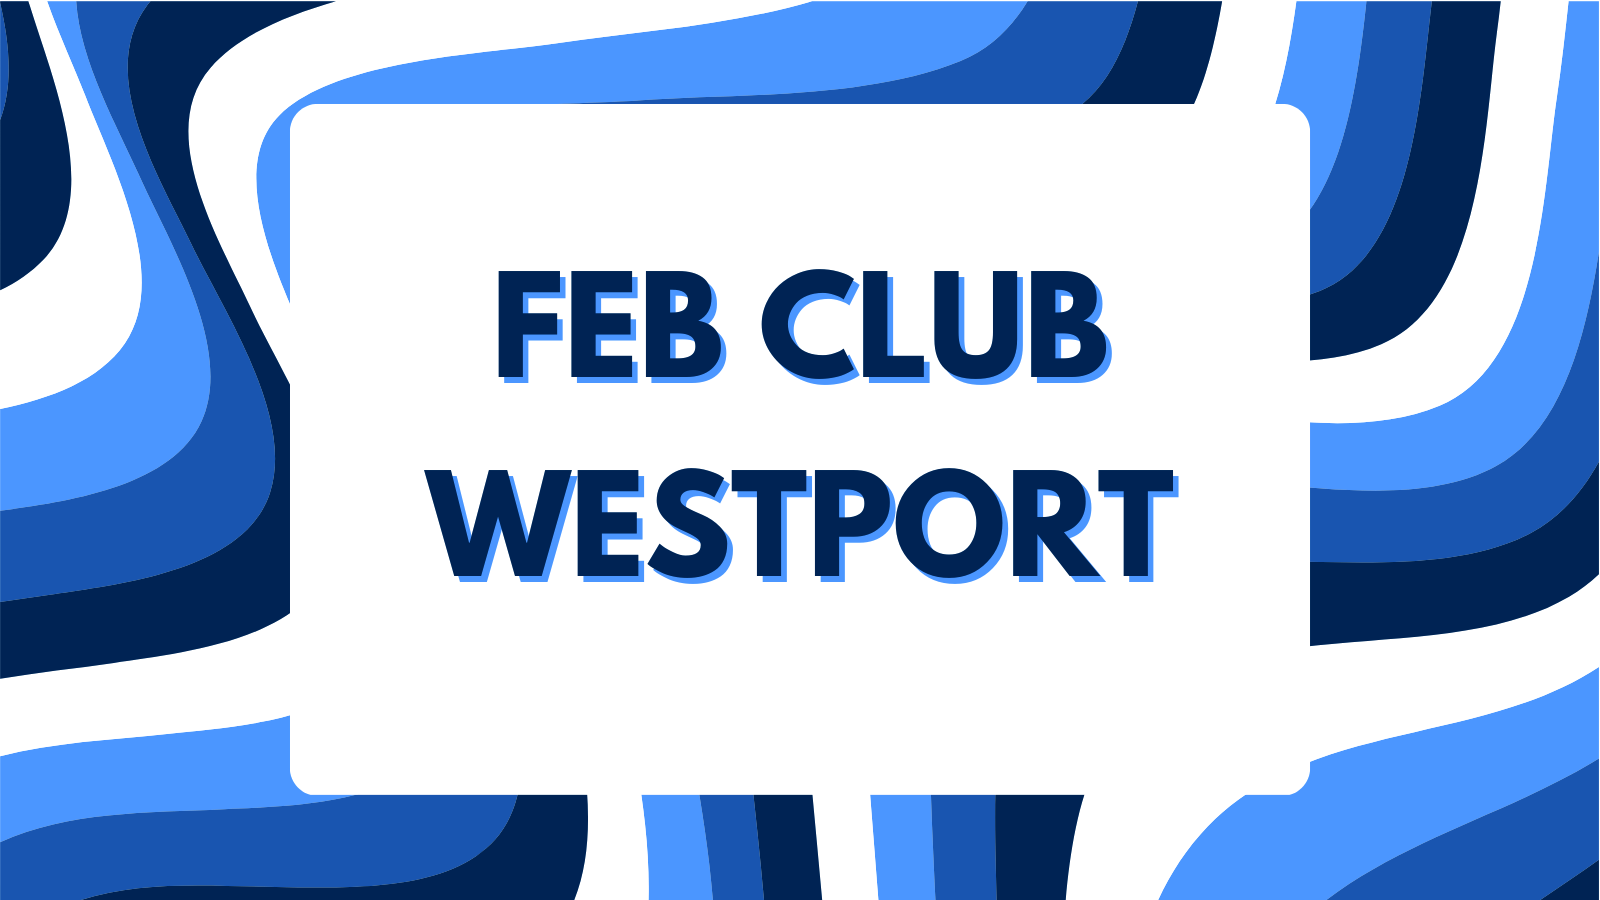 Feb Club Westport